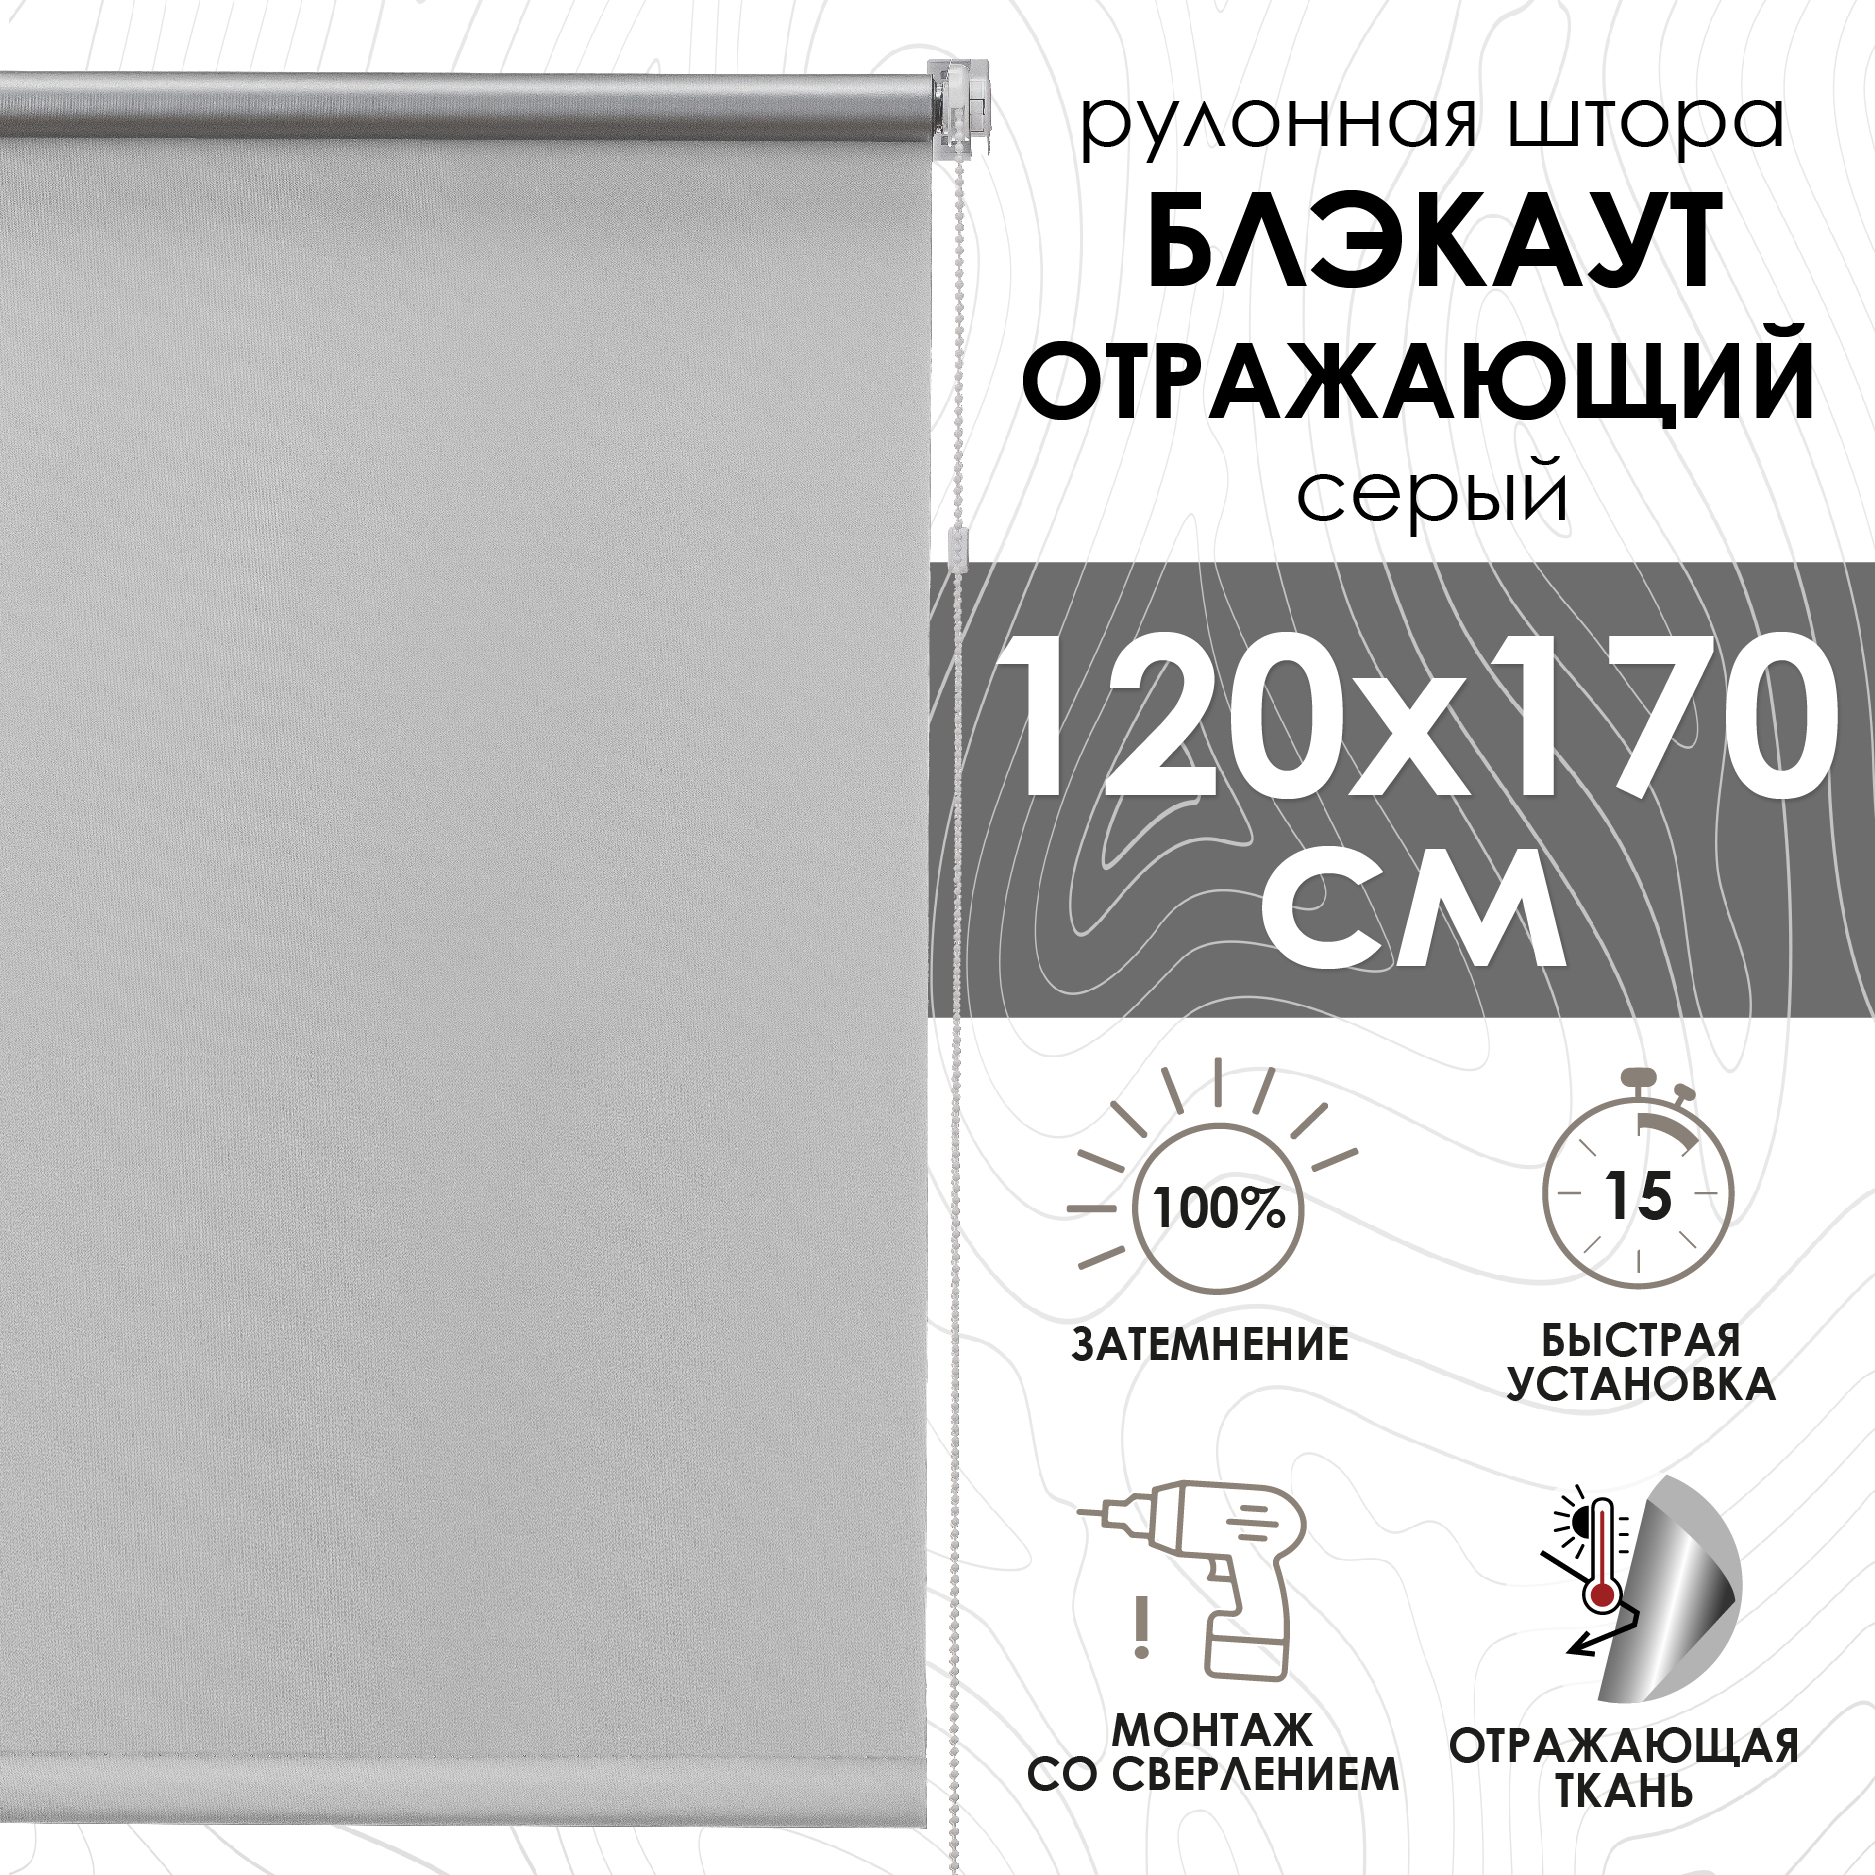 Рулонная штора Эскар отражающий, серый, 120х170см, арт. 81462120160